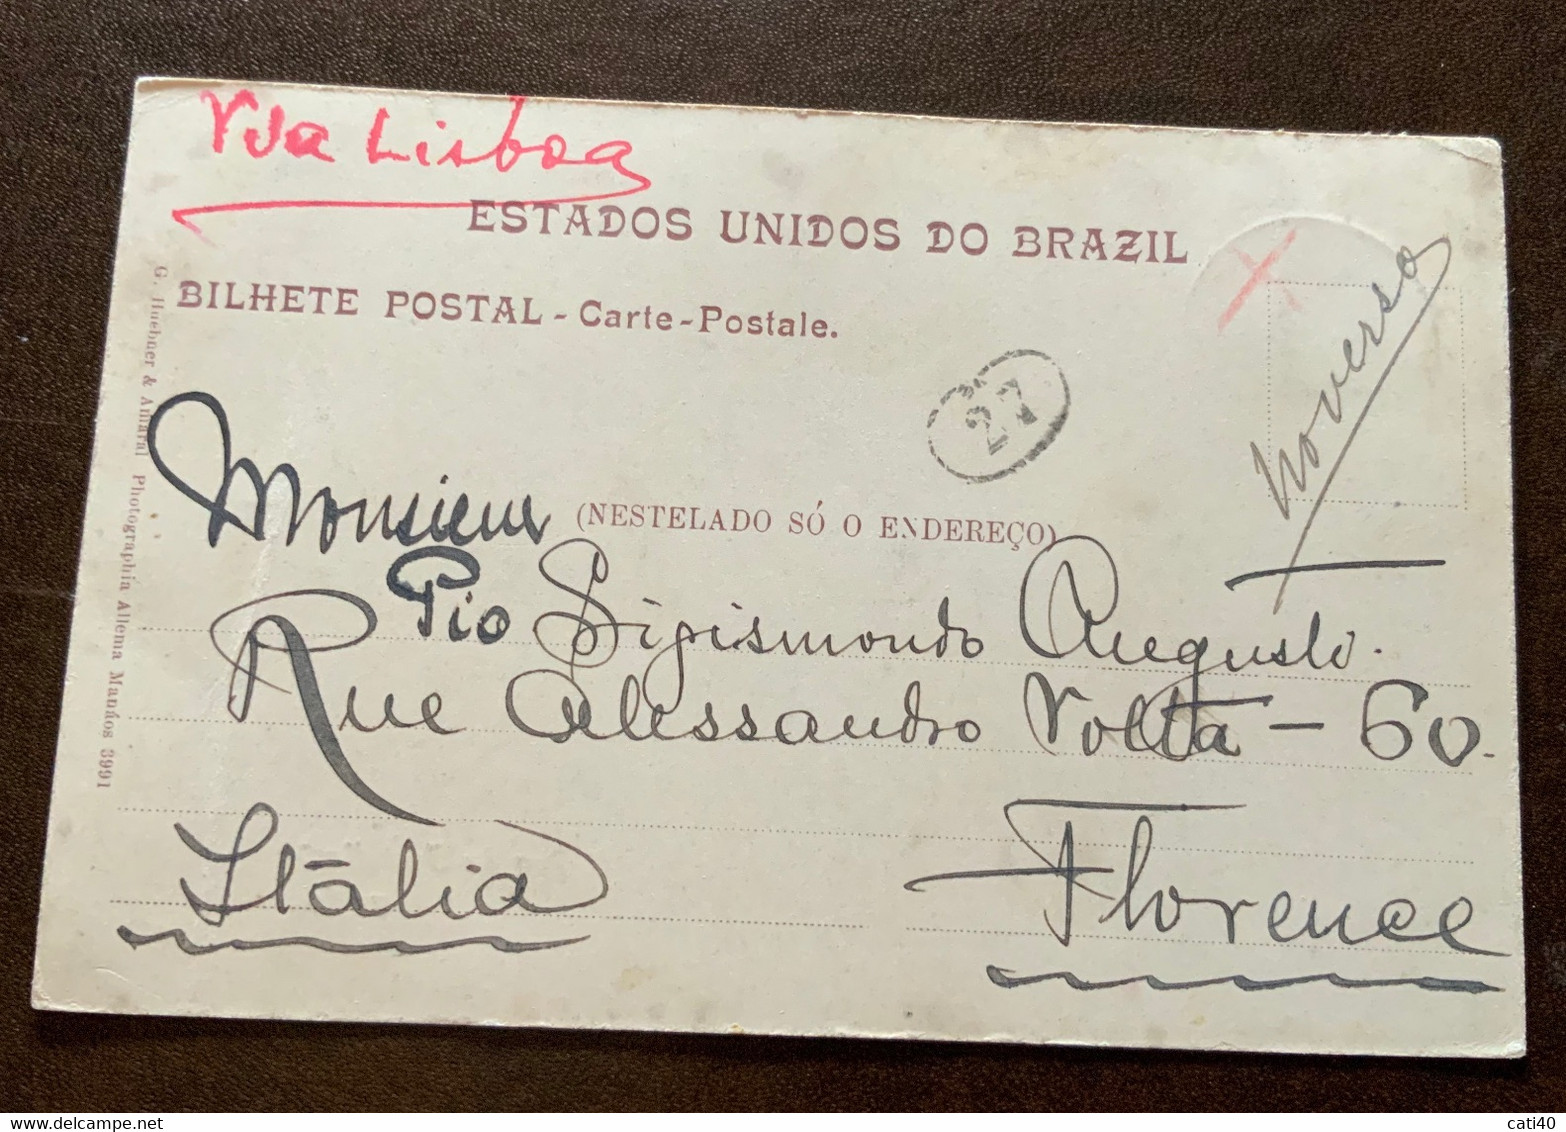 BRASIL - MANAOS - RUA DE INSTALAÇÃO - VIA LISBOA FROM  MANAOS AMAZZONAS 12/11/06 To  FLORENCE - ITALY - 1950 – Brazil